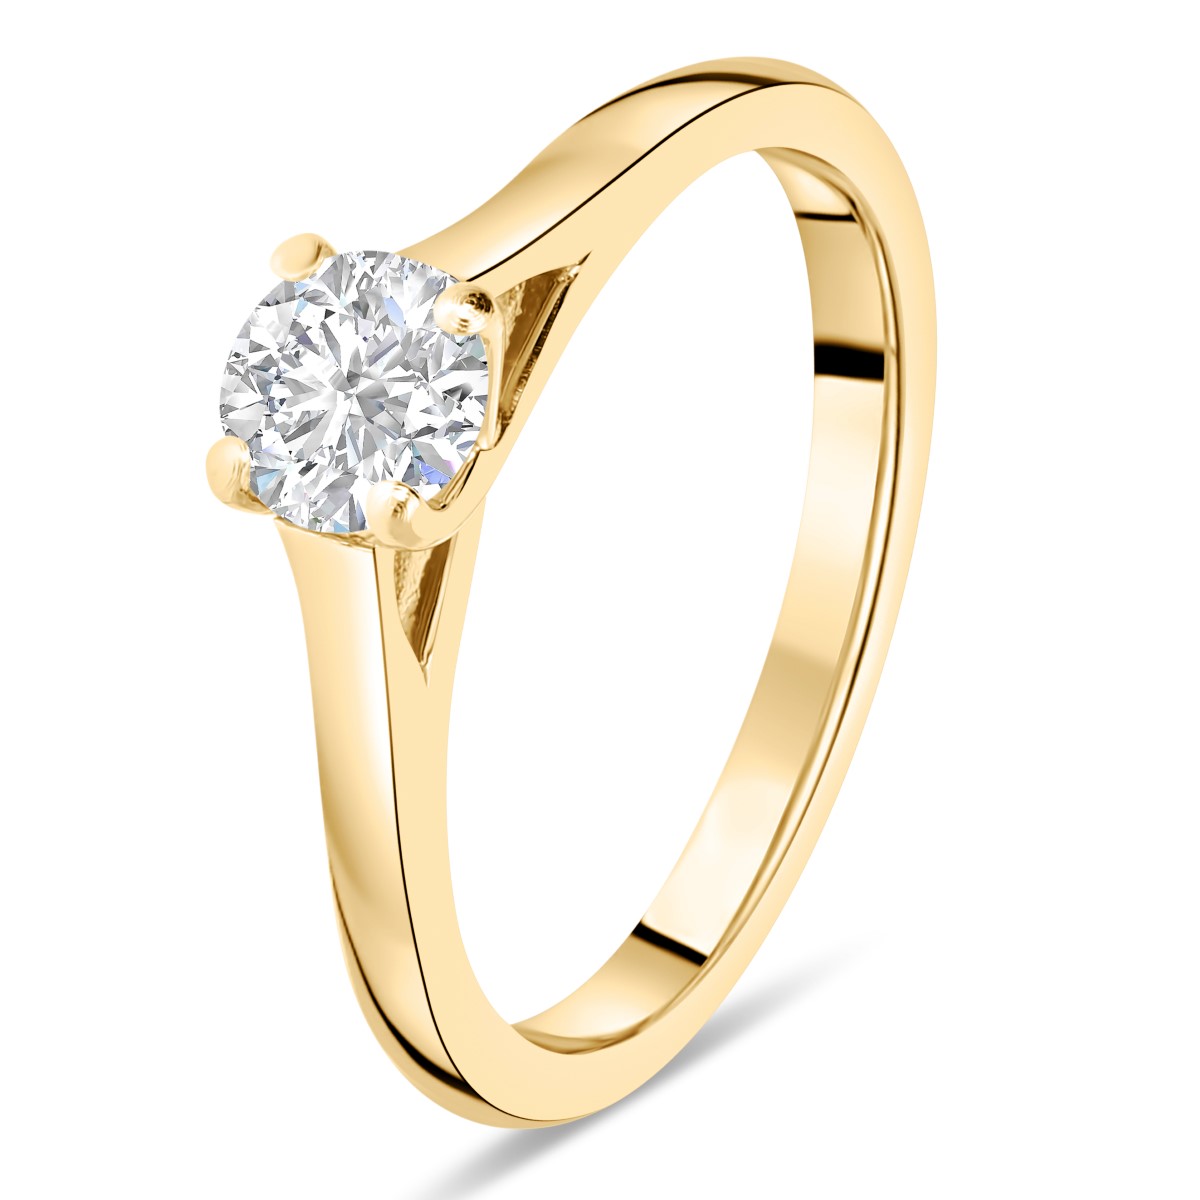 st-martin-solitaires-diamants-certifies-style-classique-or-jaune-750-